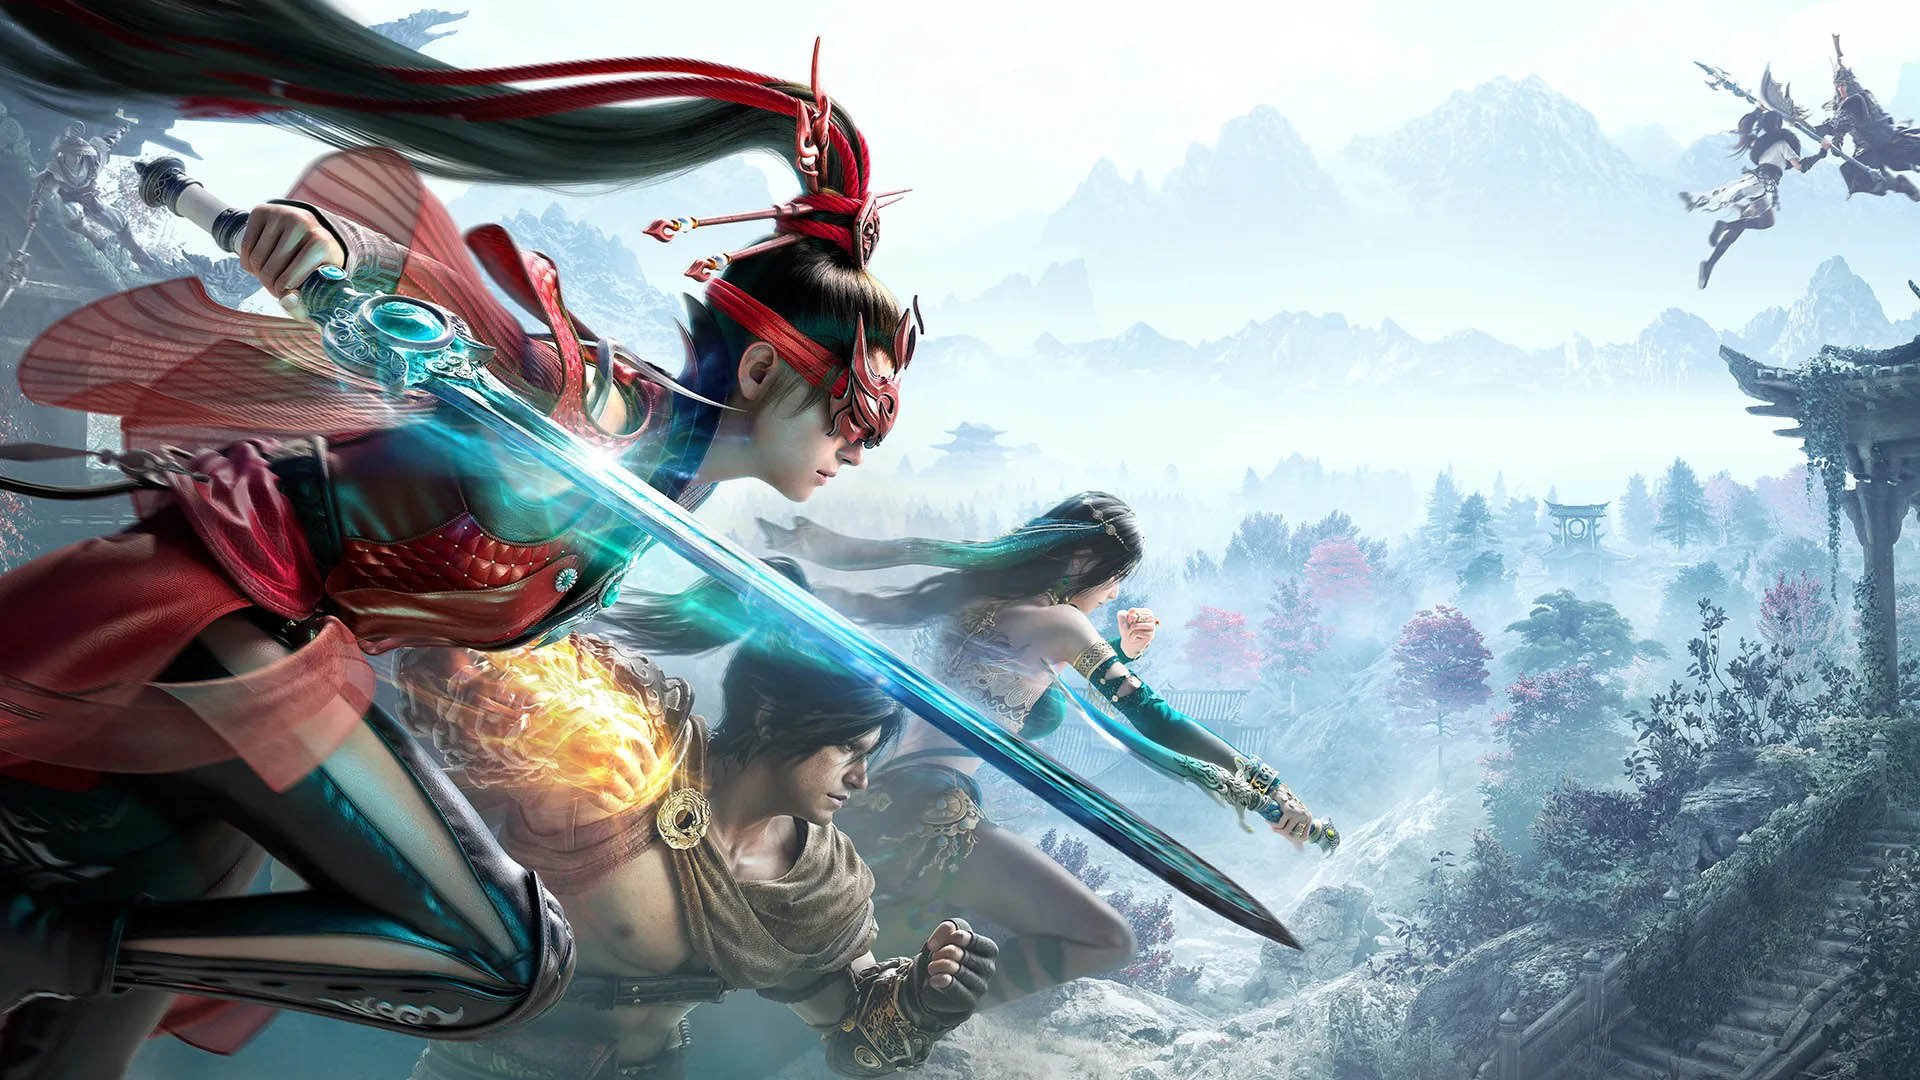 Naraka: Bladepoint goes free-to-play alongside PS5 port - Niche Gamer